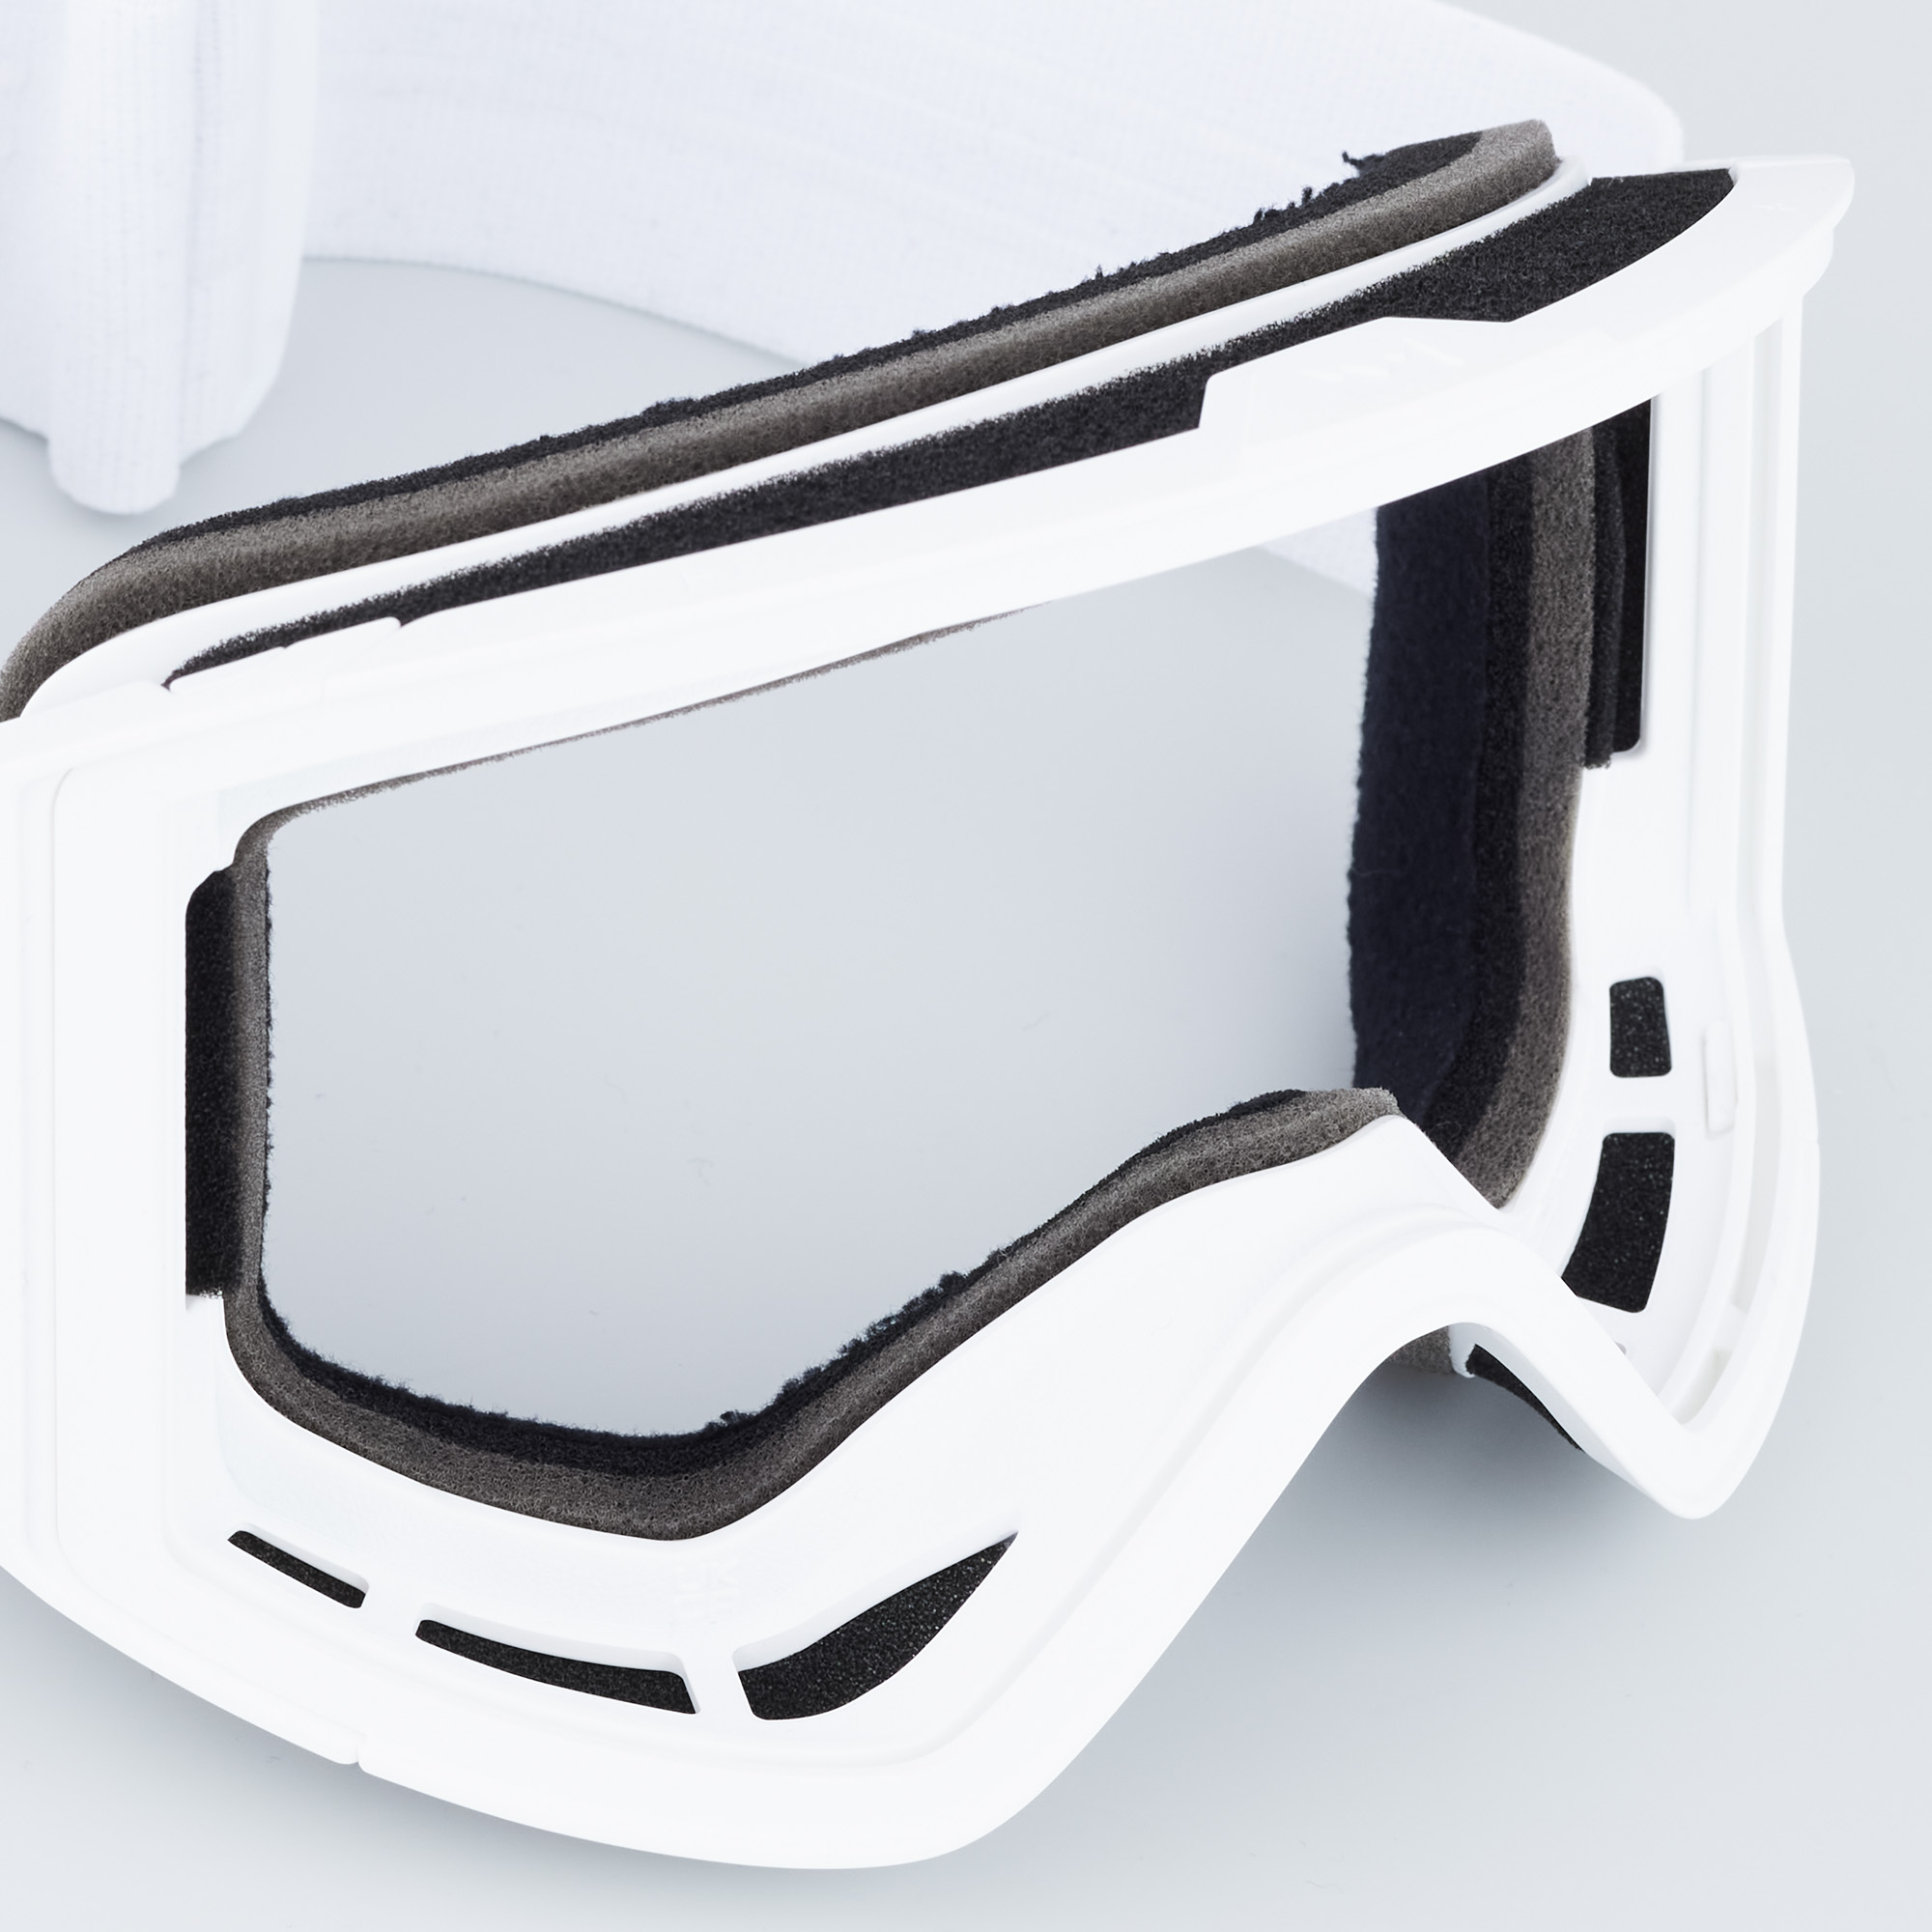 Montec Scope 2022 Ski Goggles Men White/Black Mirror